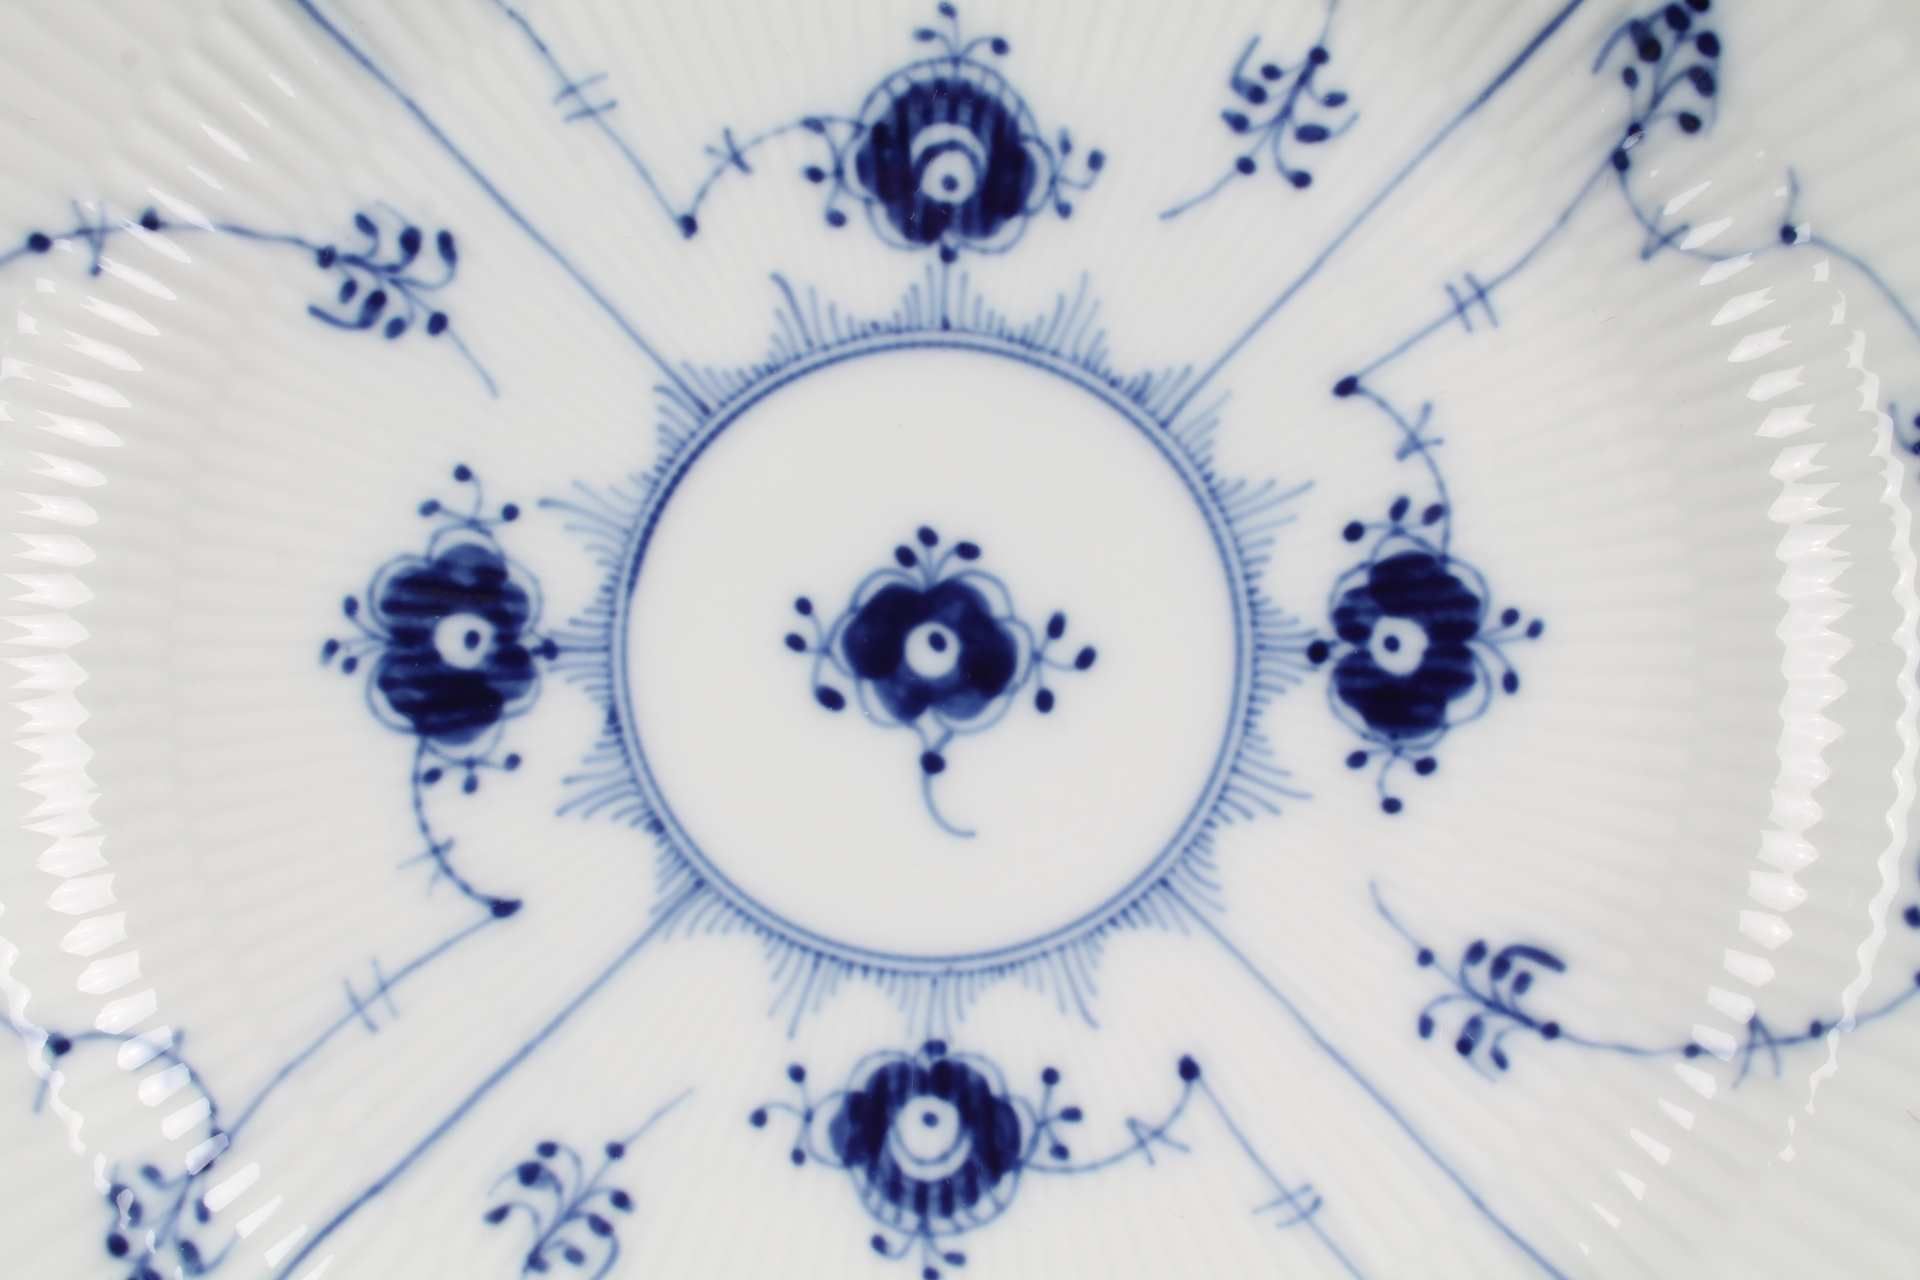 Royal Copenhagen Musselmalet Vollspitze 6 Speiseteller, 6 dining plates blue fluted full lace, - Image 3 of 6